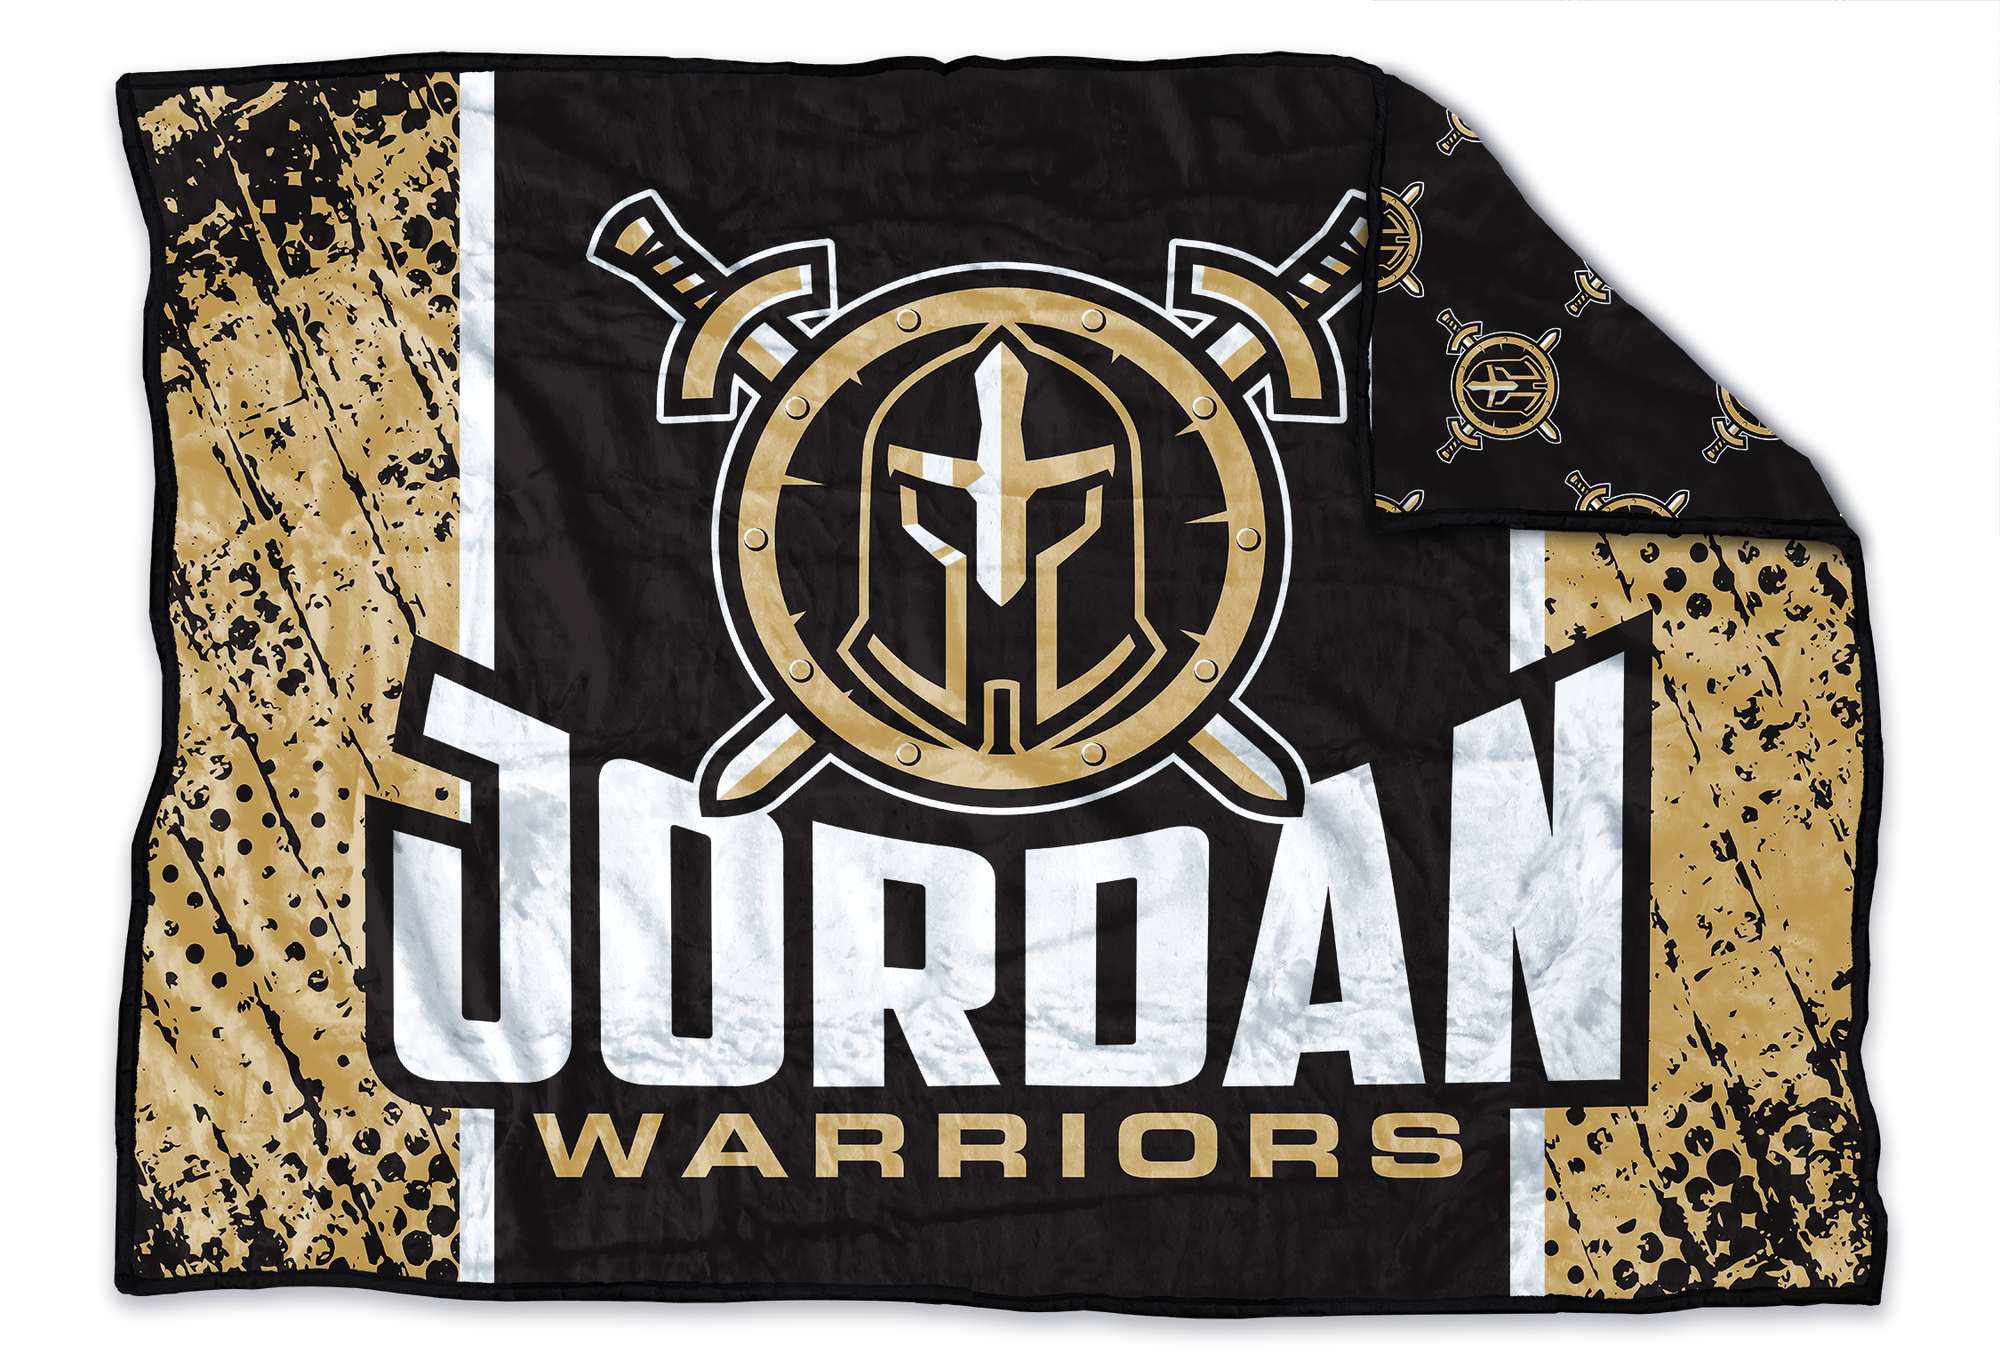 Jordan Warriors